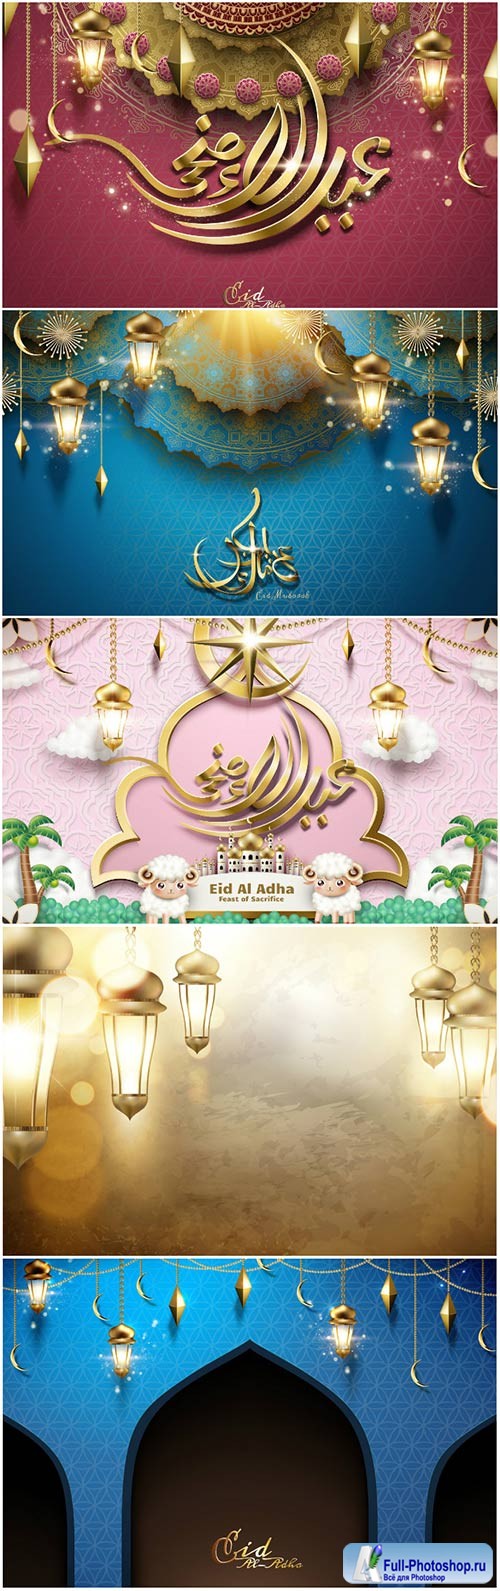 Eid Al Adha calligraphy vector design